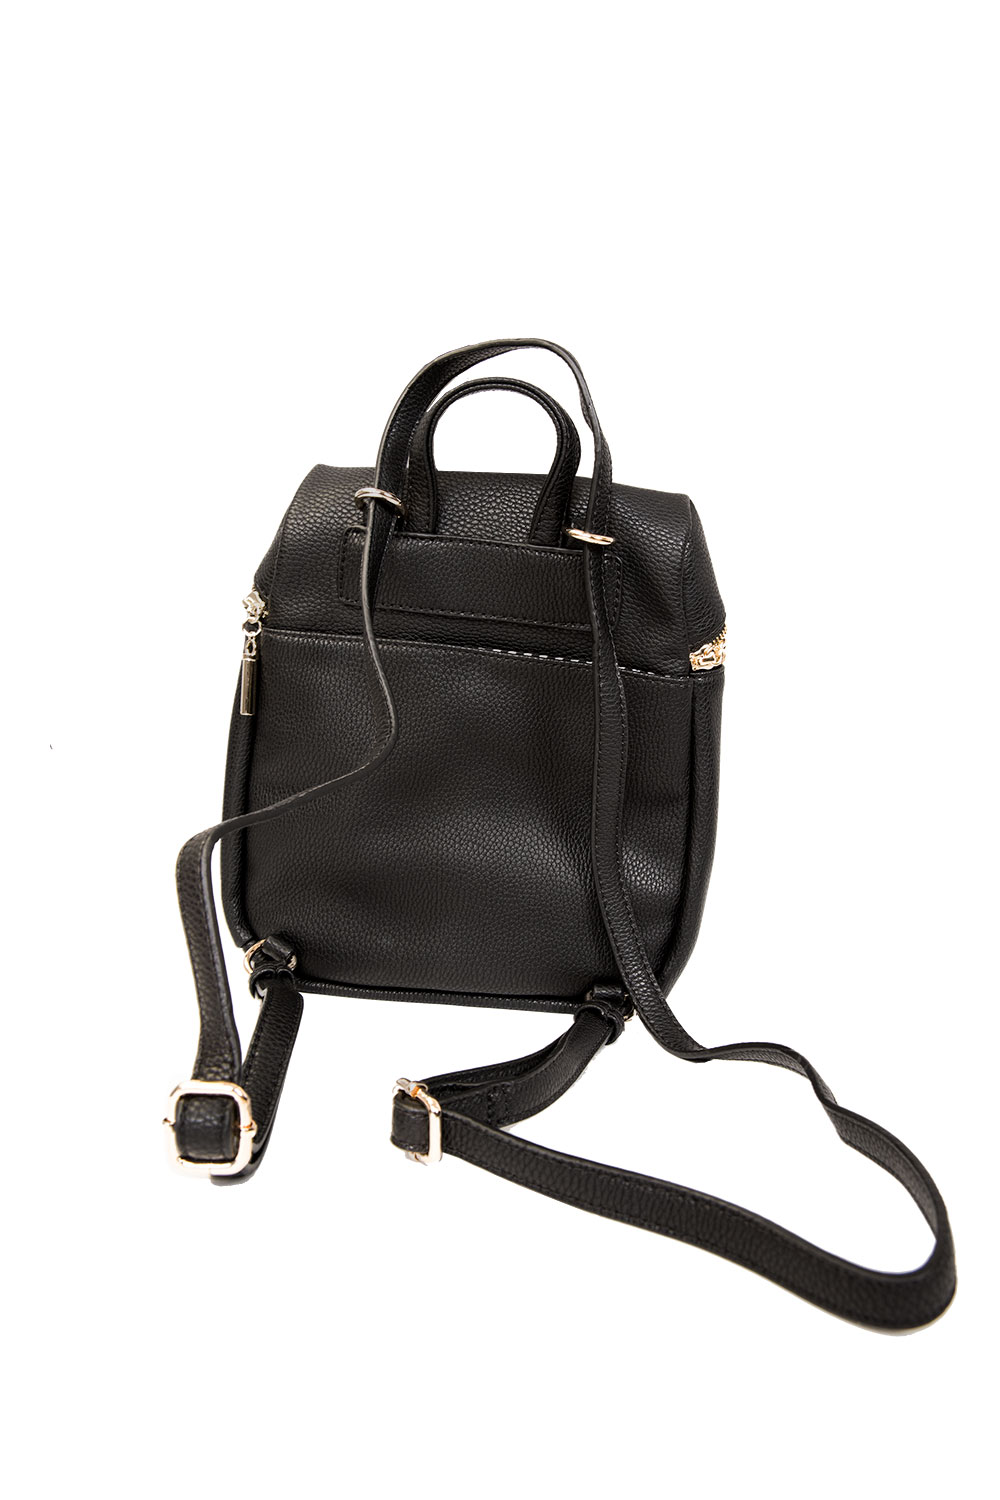 Poetic Justice | Women&#39;s Black Mini Backpack Handbag | Trendy Fashion Brand for Curvy Black Women